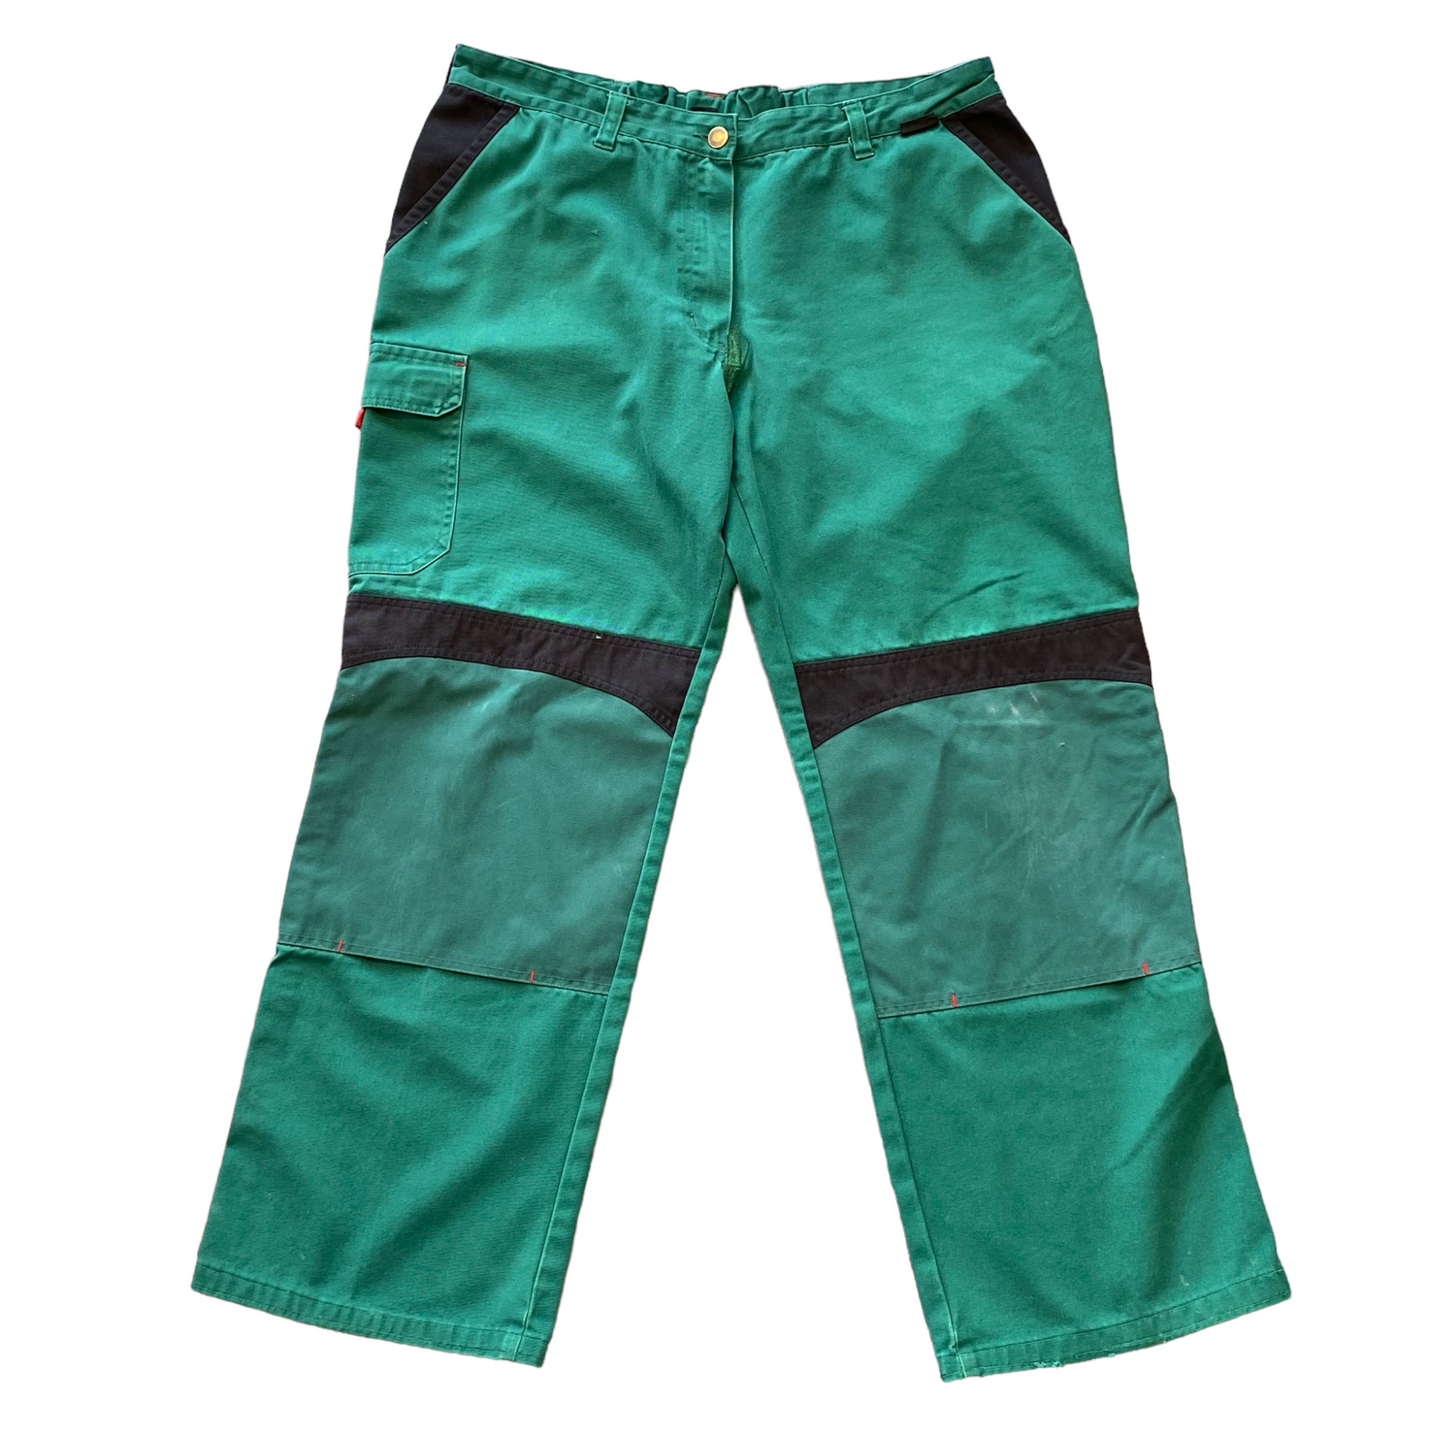 Green European Workwear Pants